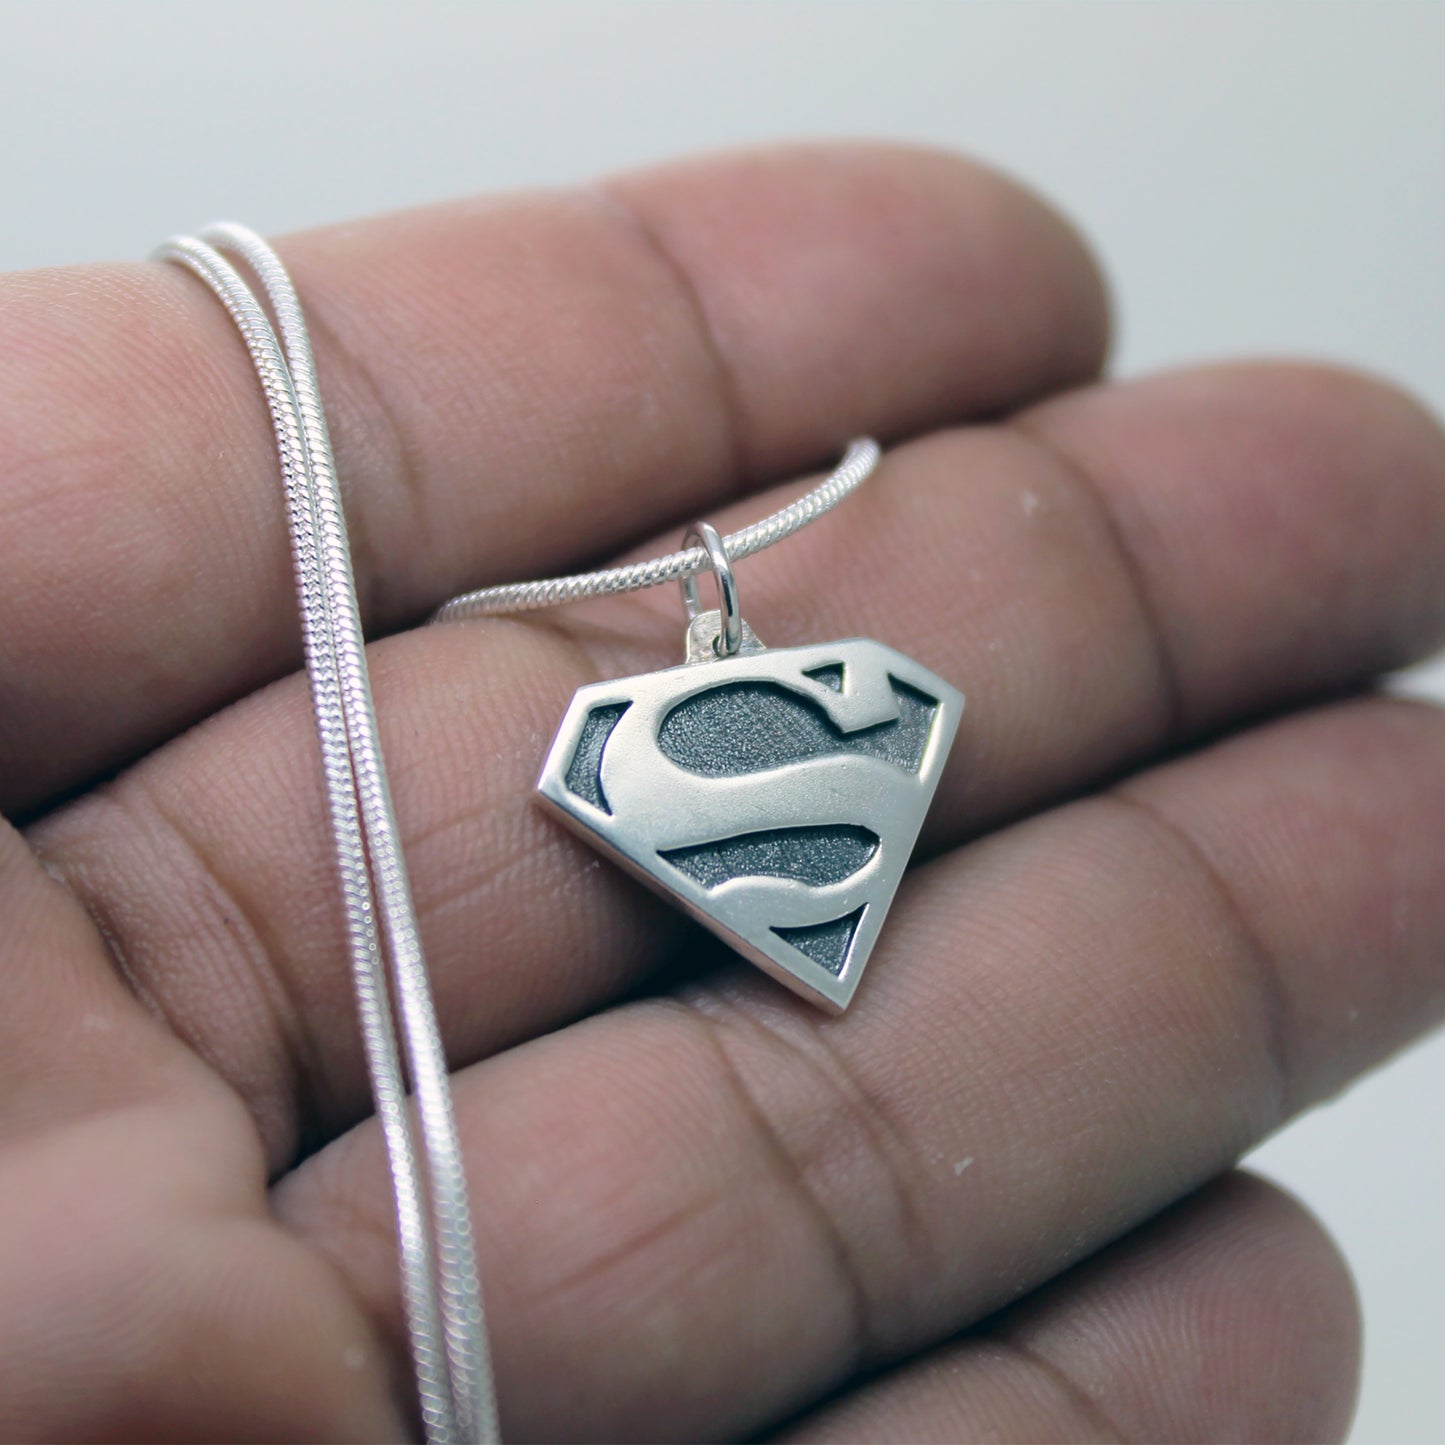 Superman / Supergirl pendant in 925 silver